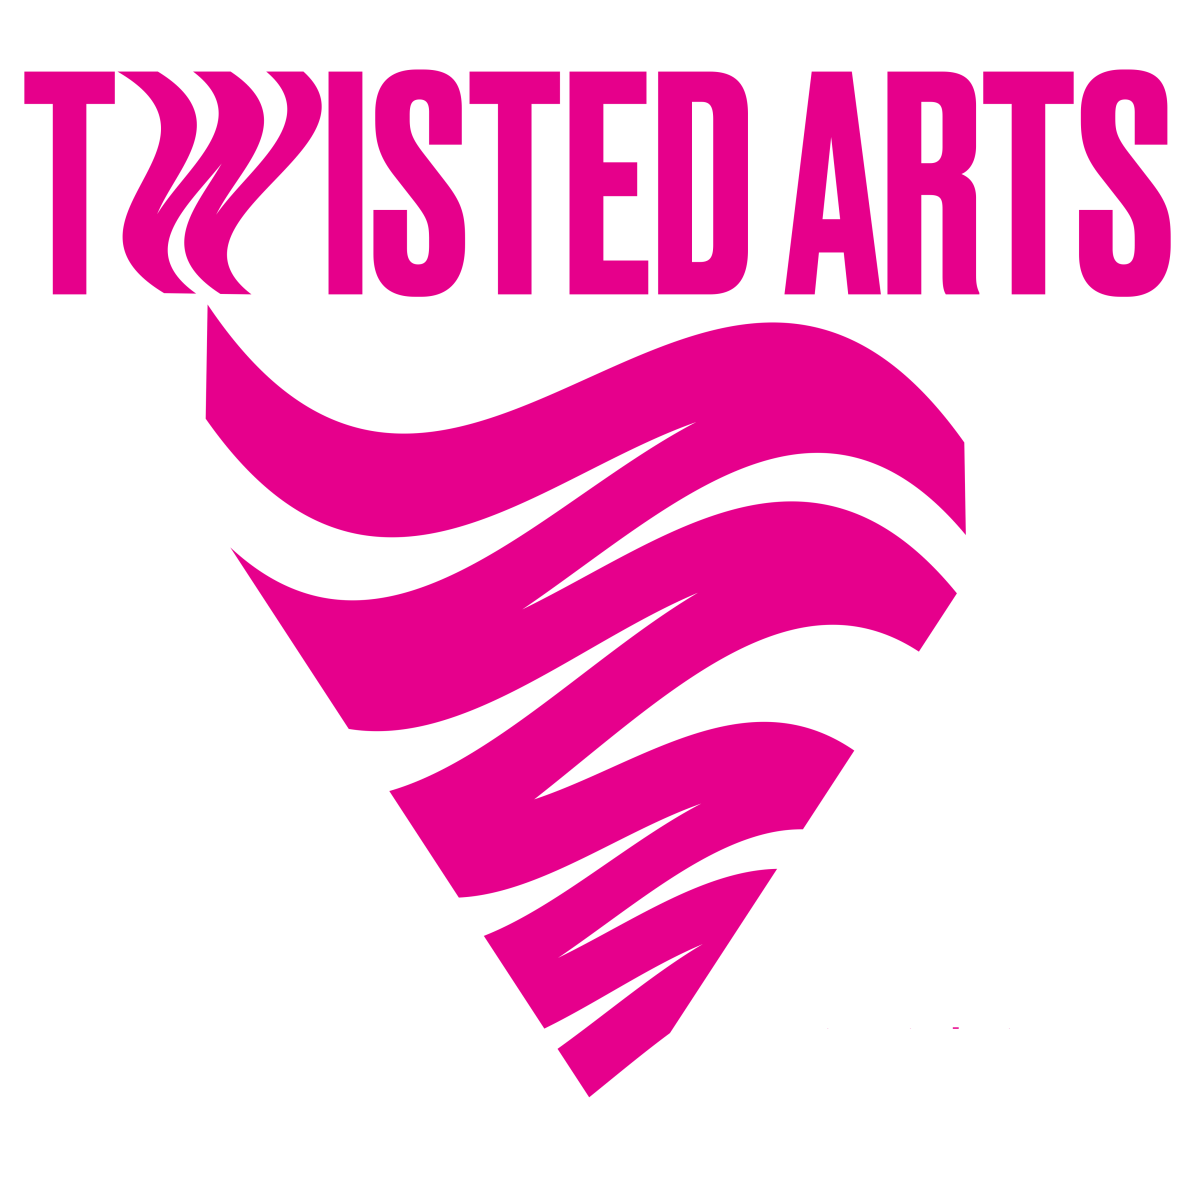 Twisted Arts